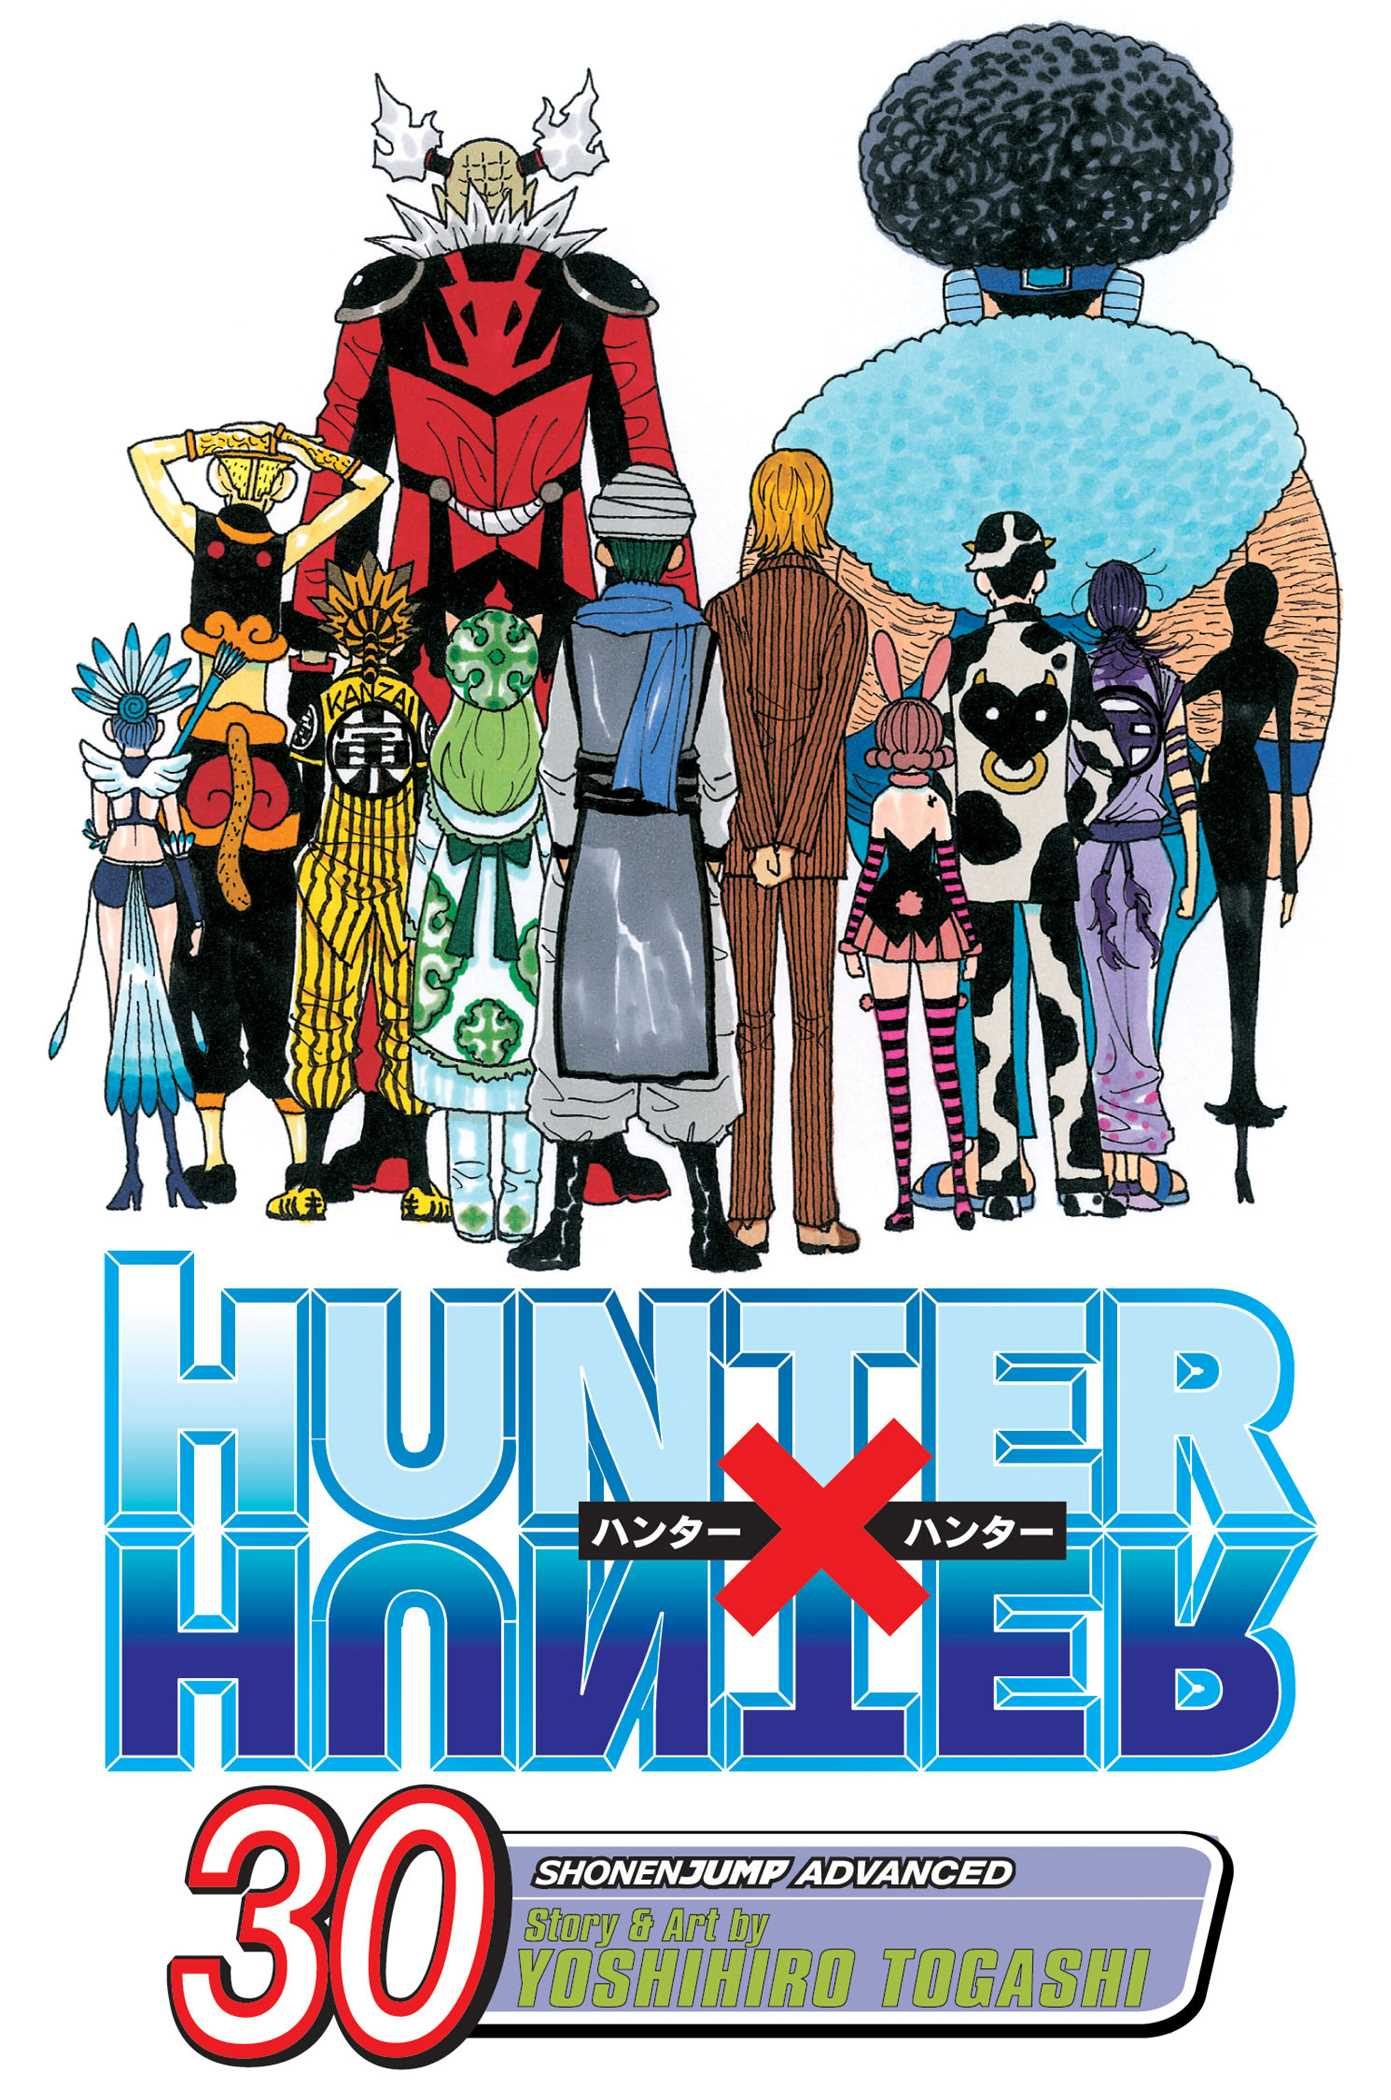 Yoshihiro Togashi's Hunter x Hunter manga returns in November - Polygon